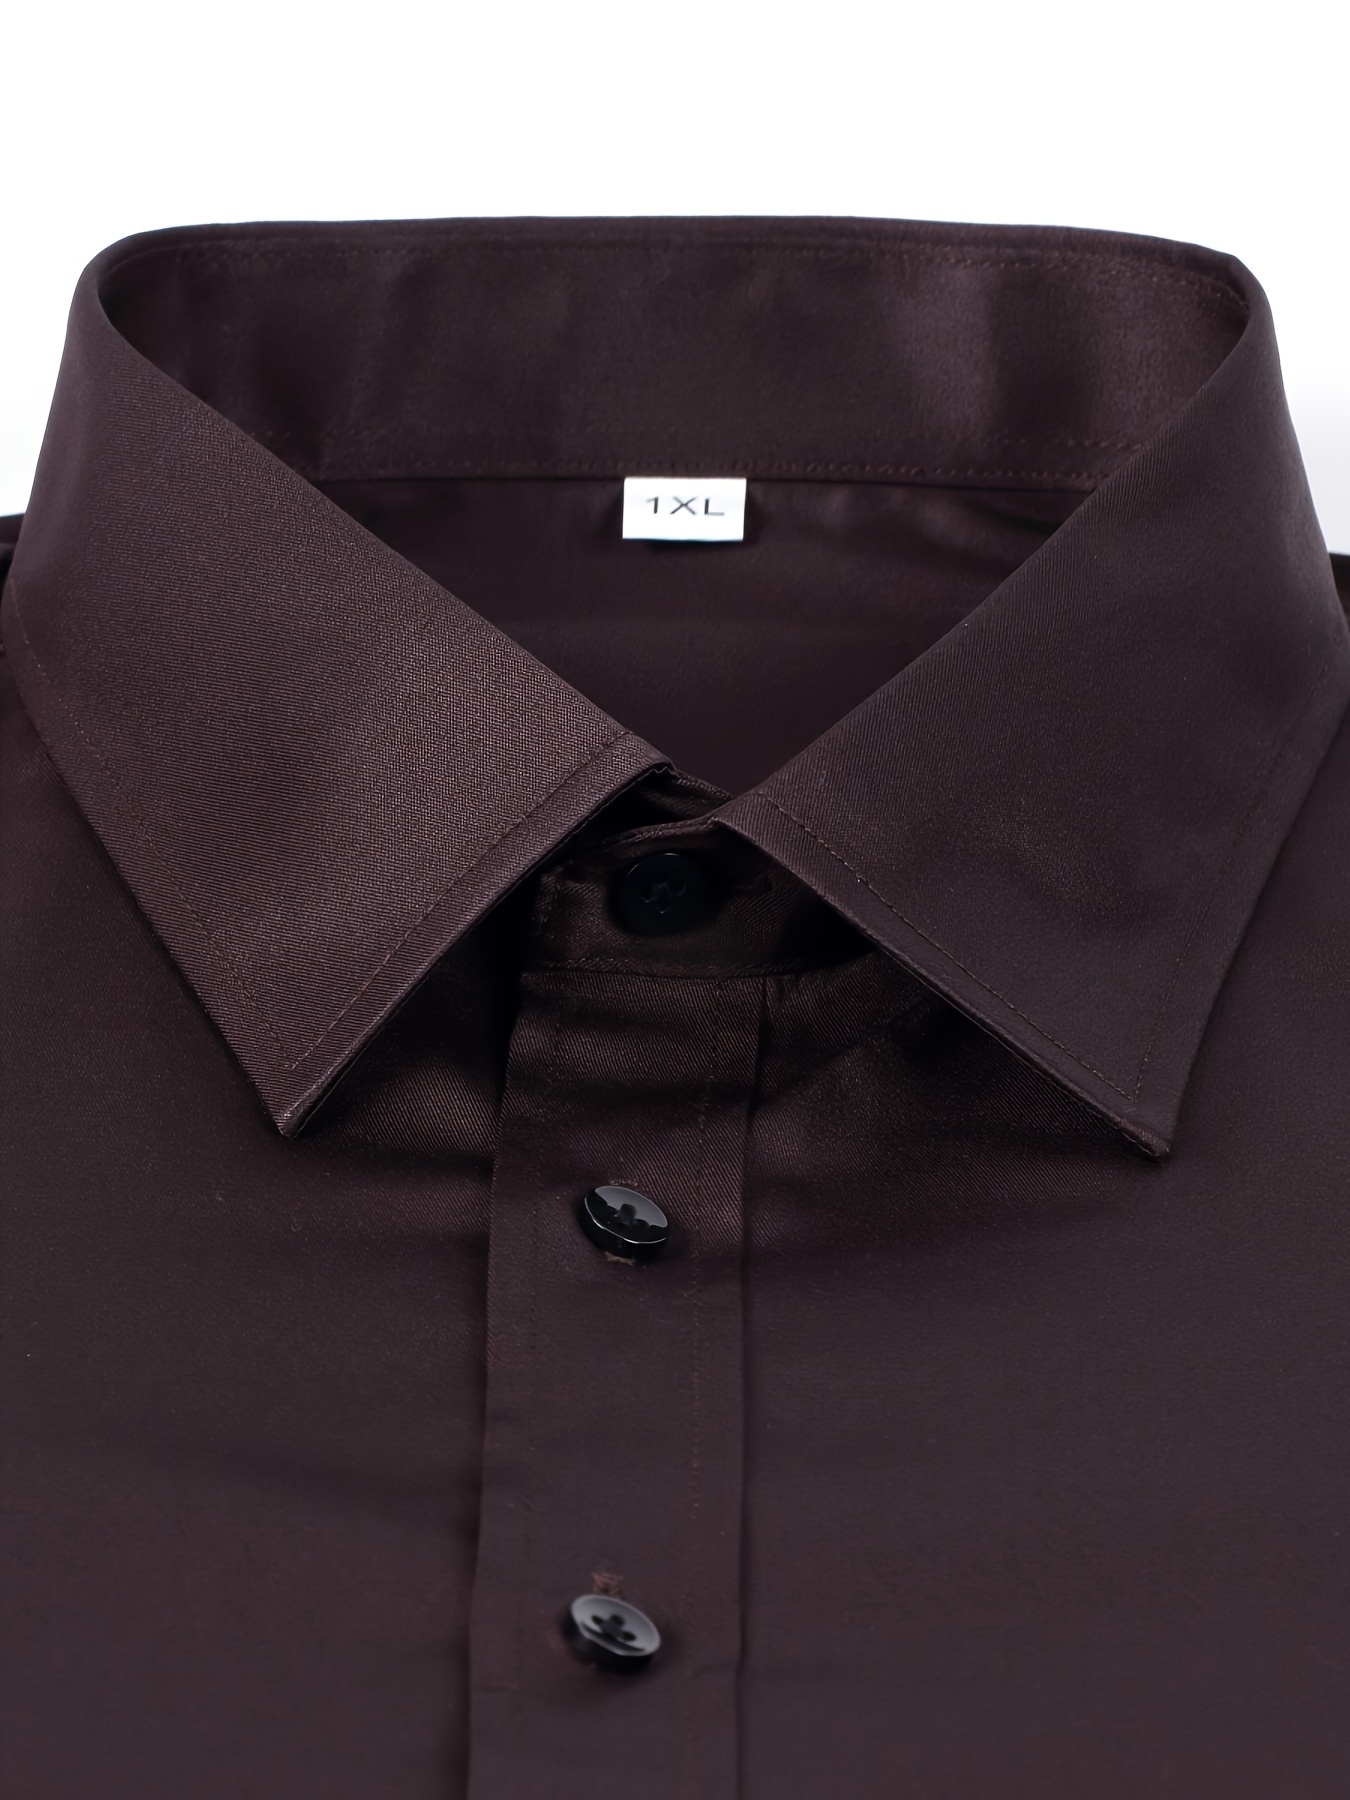 Men's Casual Fashion Long-sleeved Slim-fit Formal Shirt